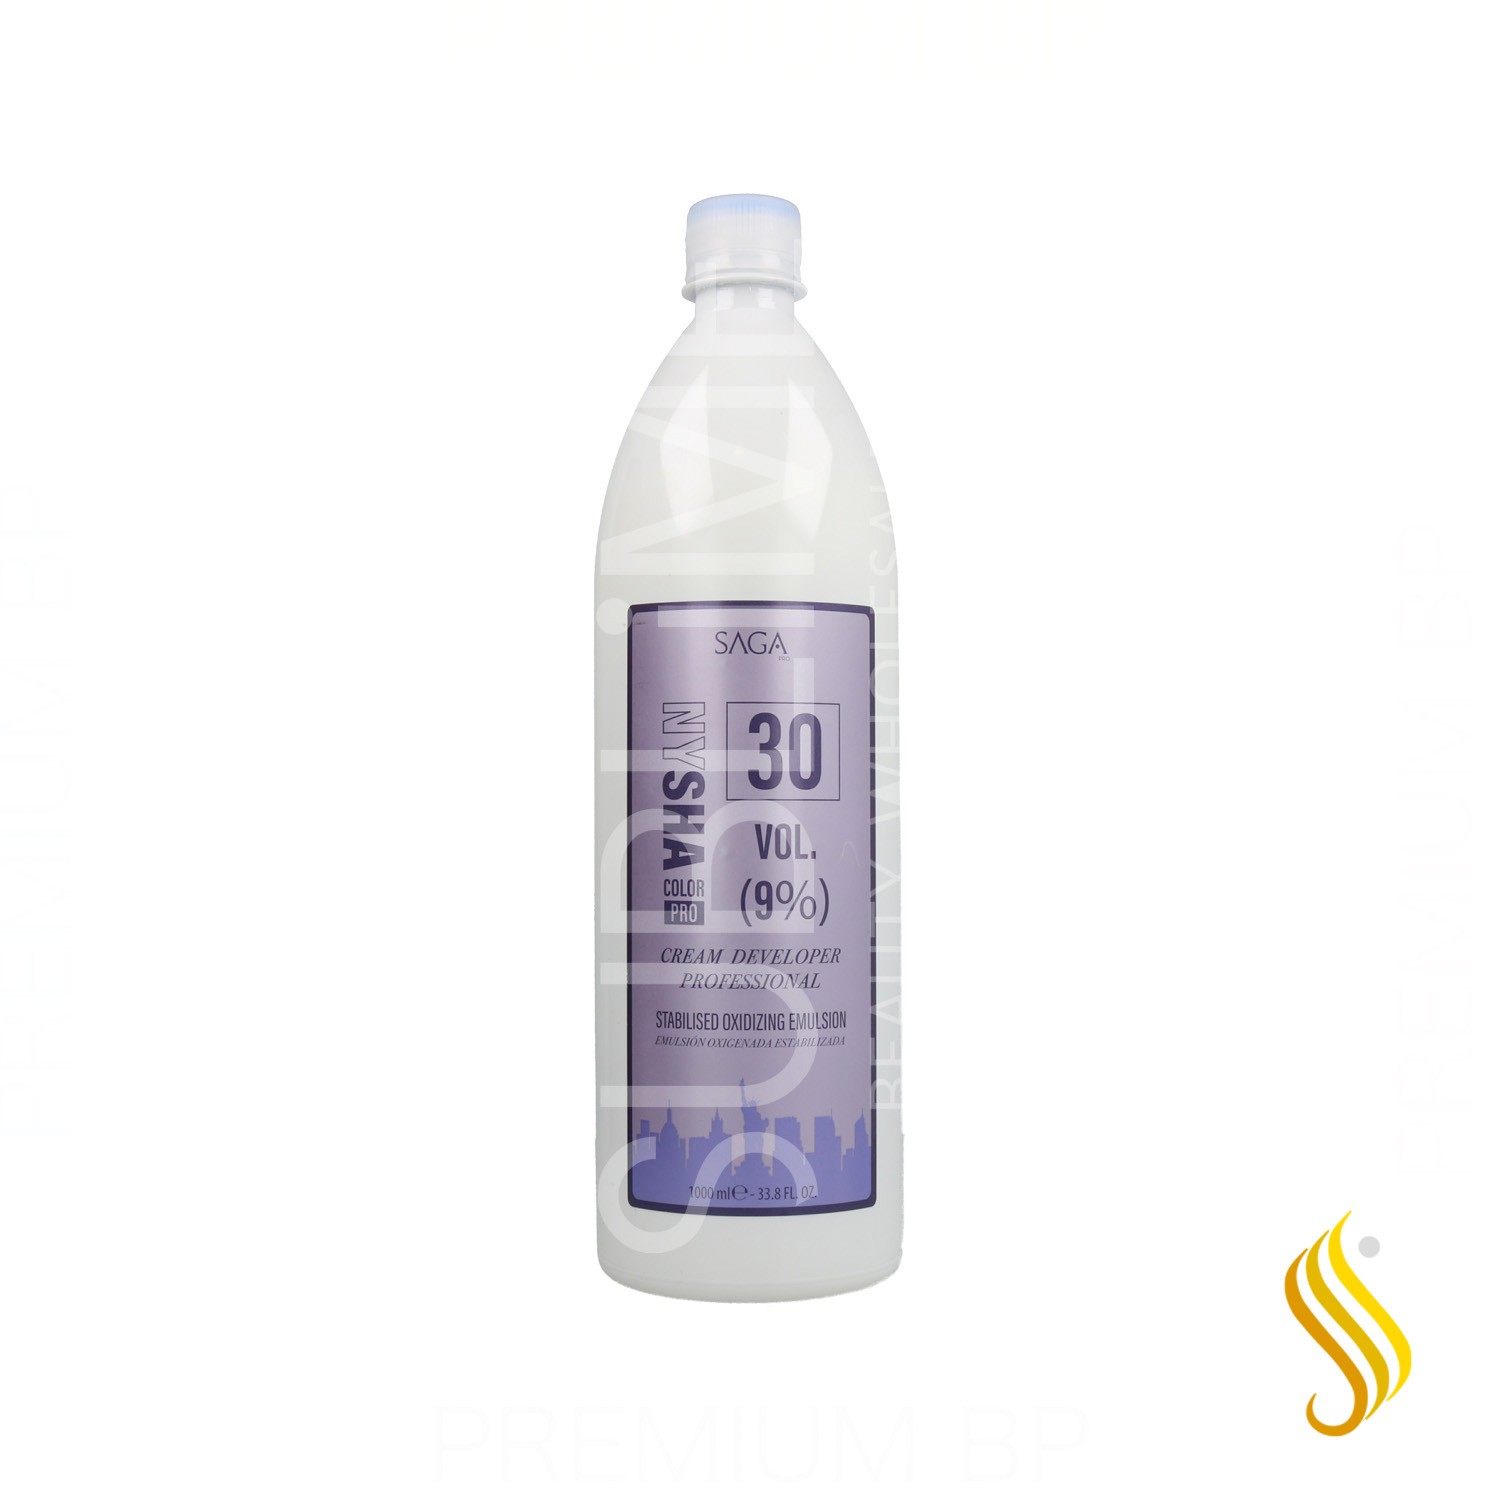 Saga Nysha Color Pro Oxidante 30 Vol (9%) 1000 ml